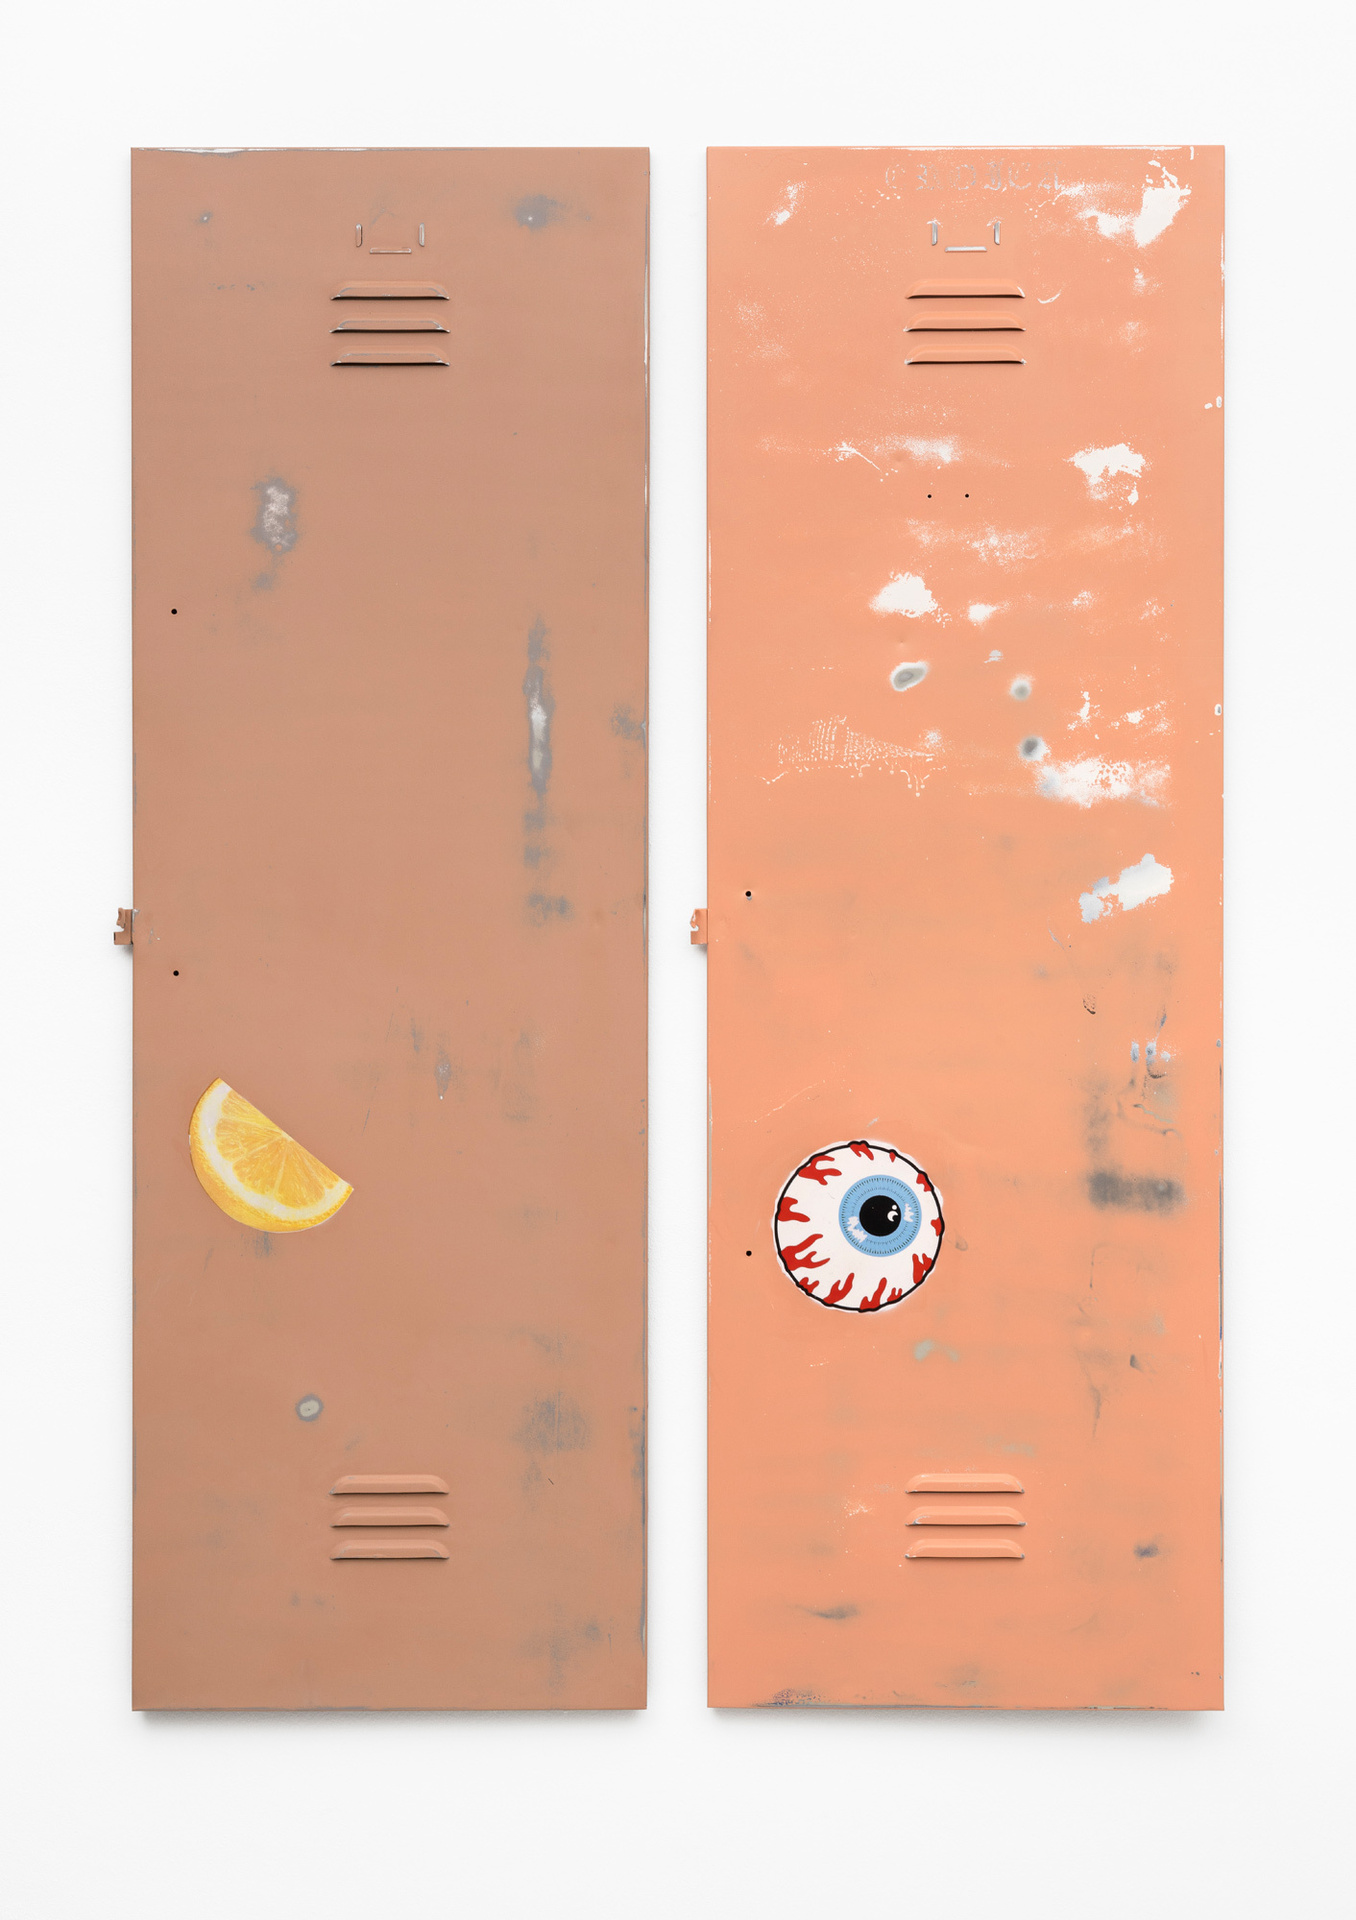 Felix Kultau, Lemon Locker and Eye Ball Locker, each 2020, acrylic and digital print on metal, 168 x 55 cm